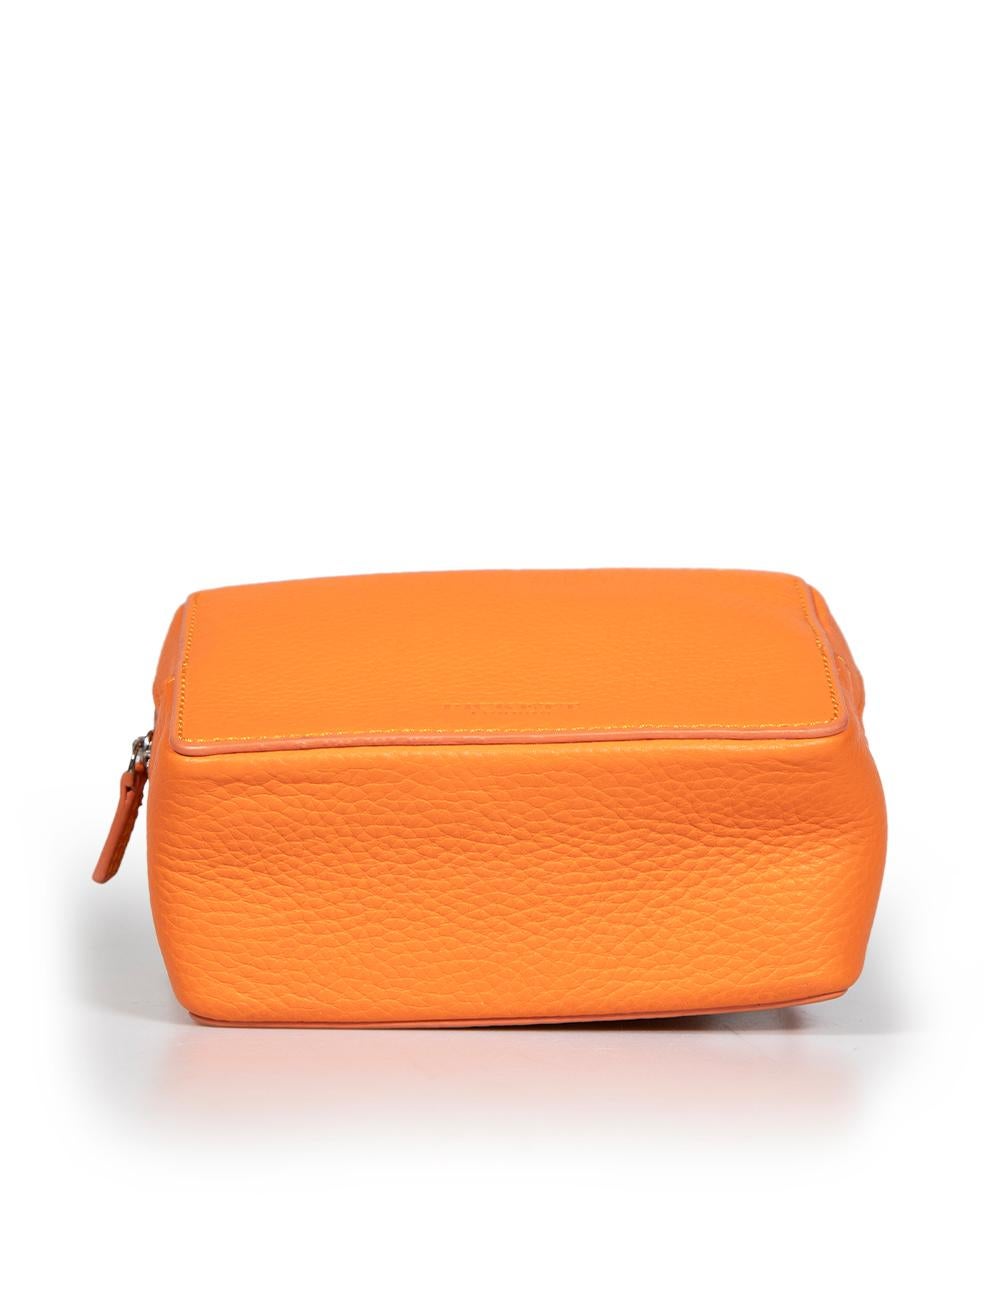 Women's Pickett Orange Leather Convertible Bag